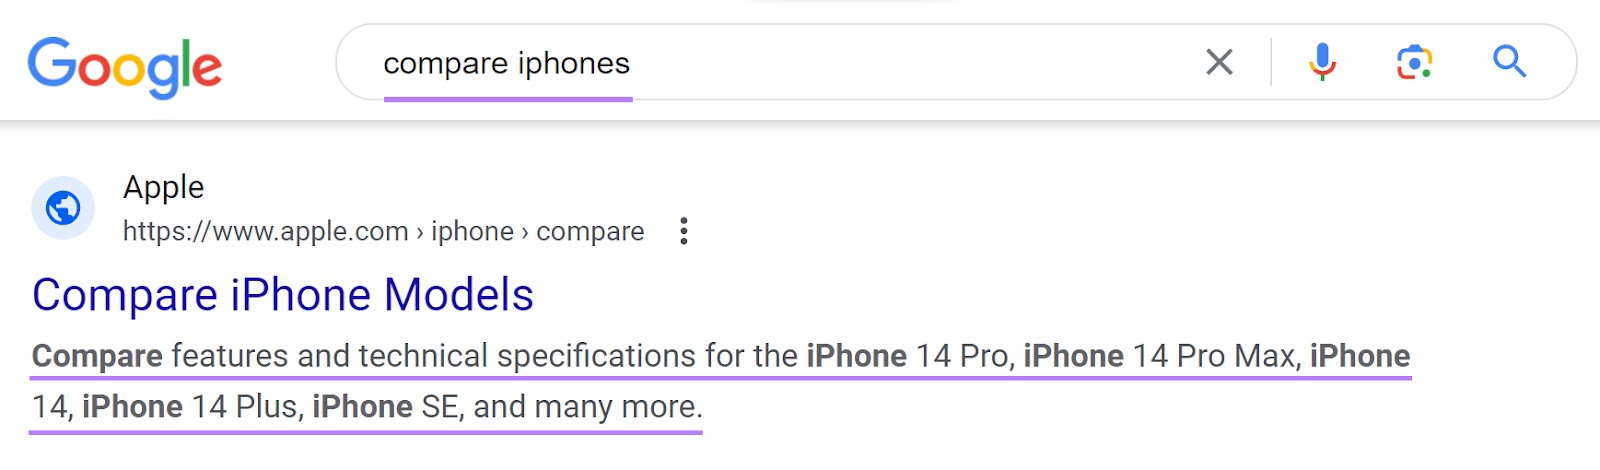 Apple's "Compare iPhone ******" page meta description on SERP